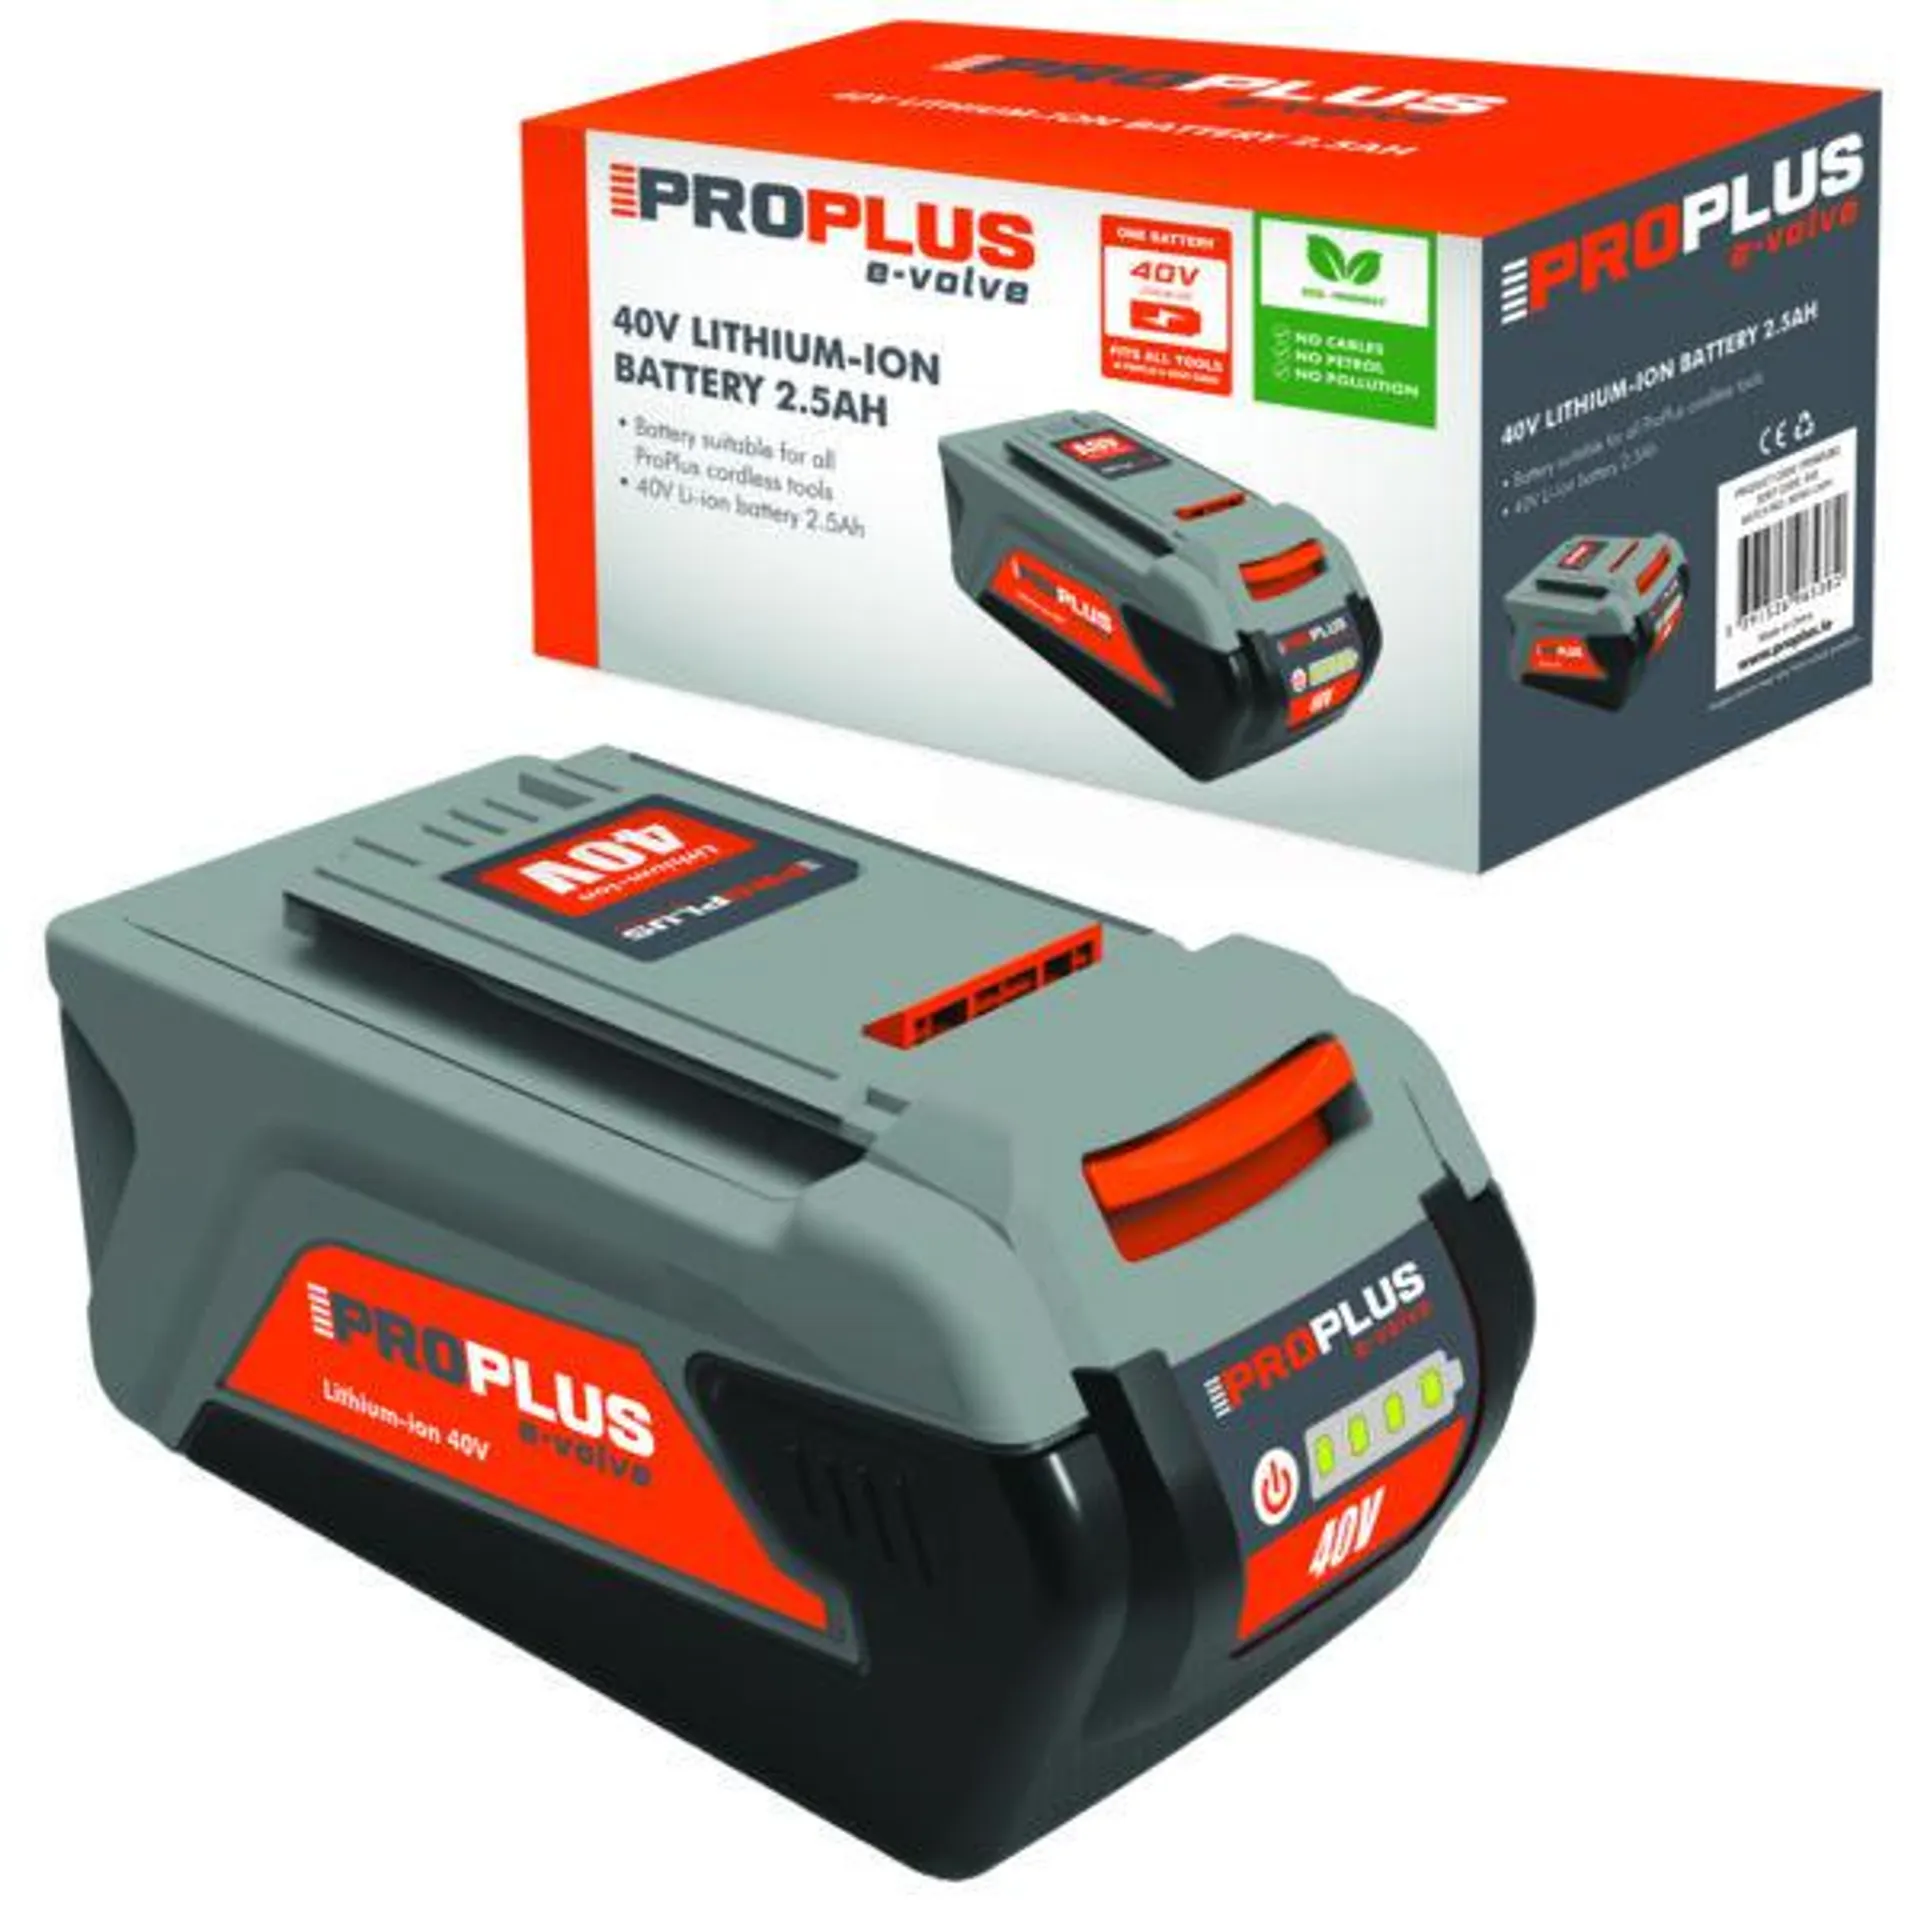 Proplus EVOLVE 40v – Li-ion Battery